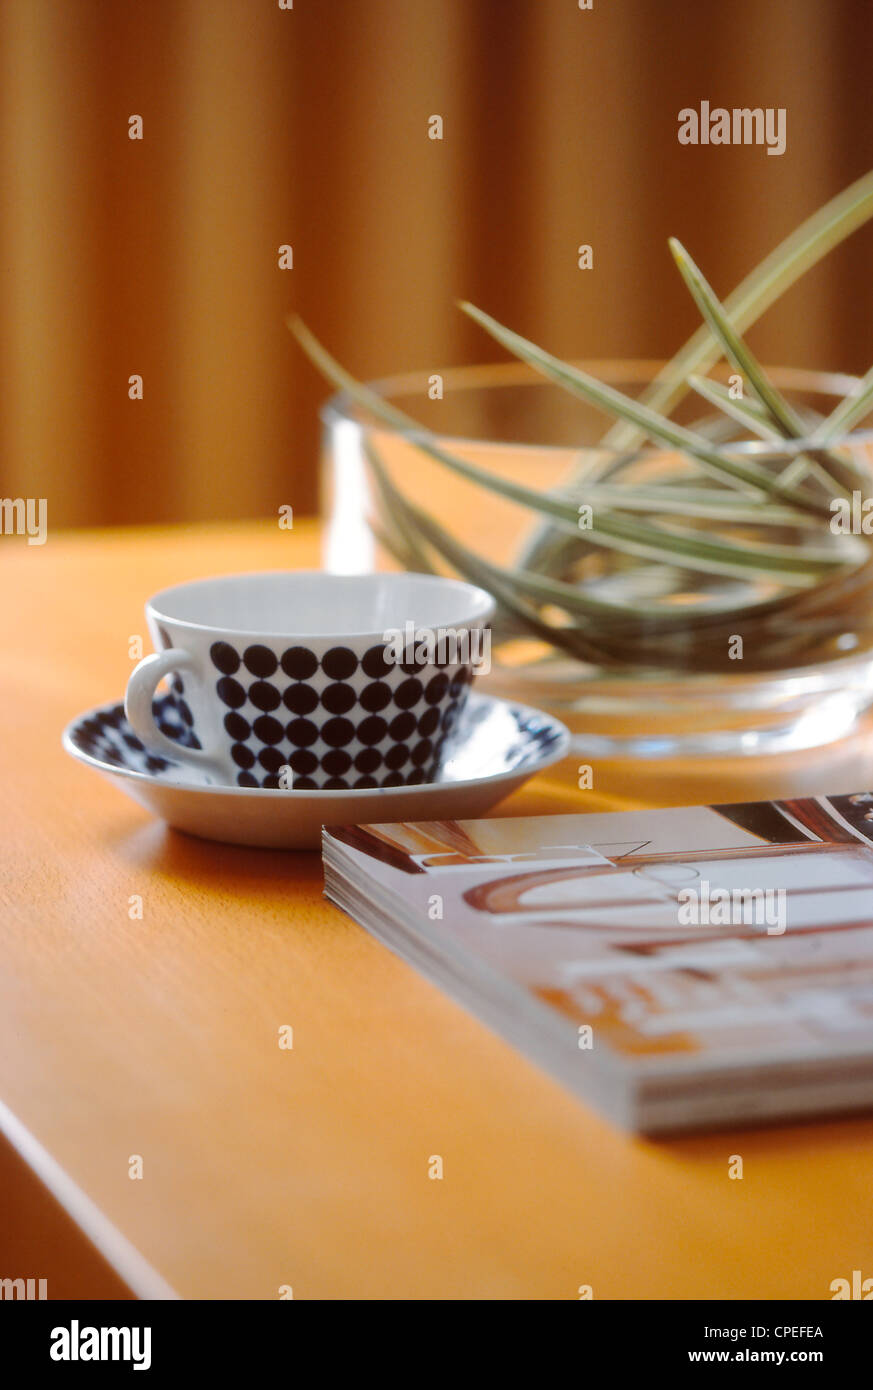 Teacup, Saucer, Glass Bowl And Magazine On Table Stock Photo